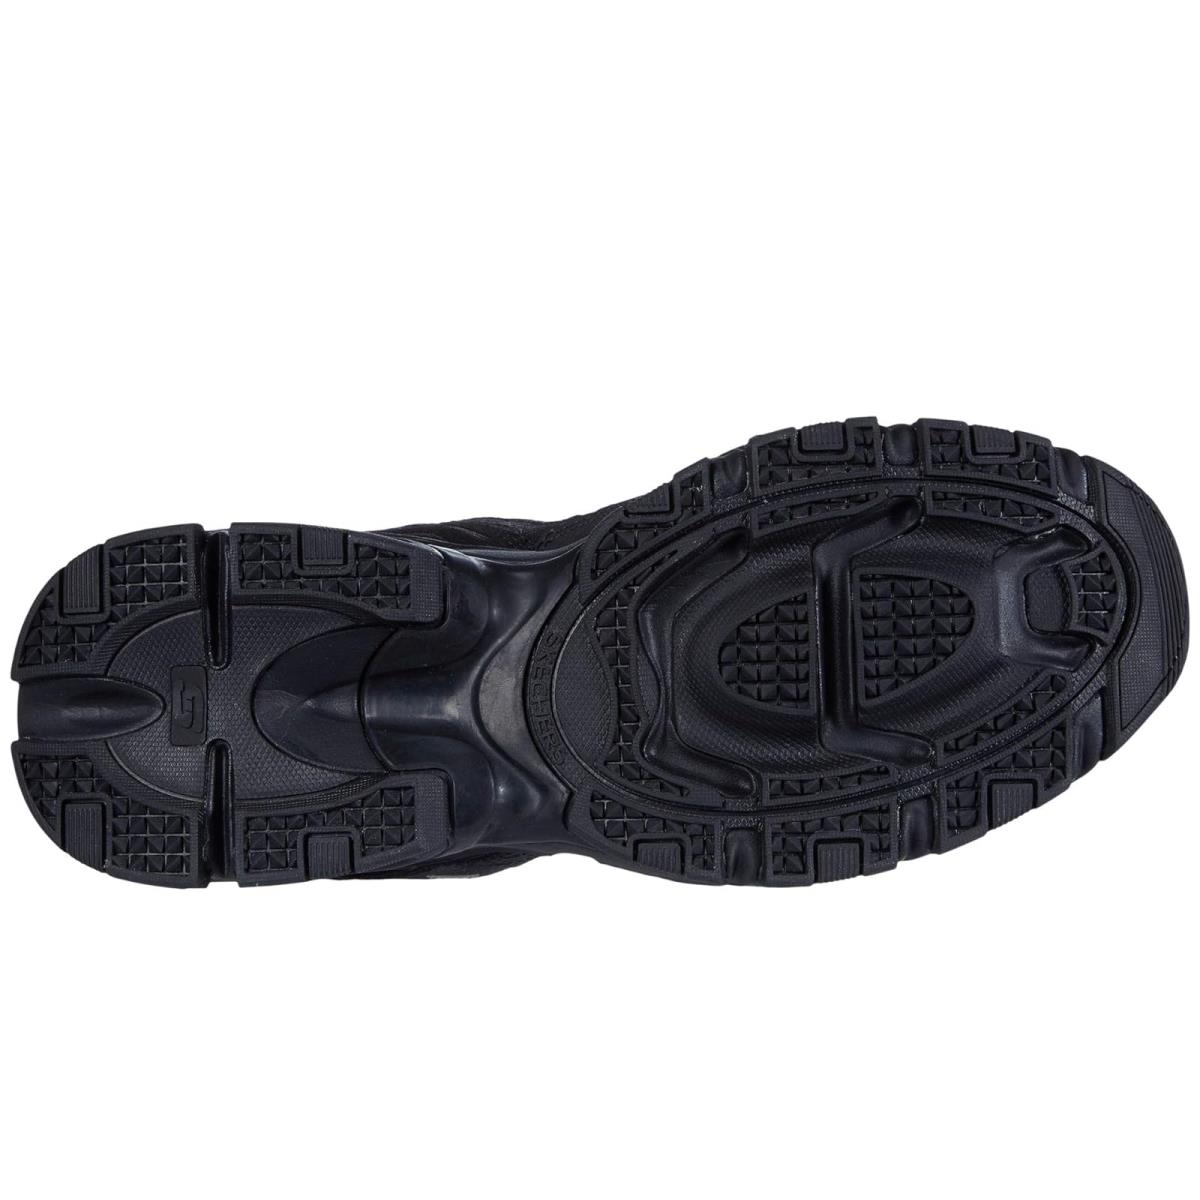 Skechers shoes  - Black/Black 1